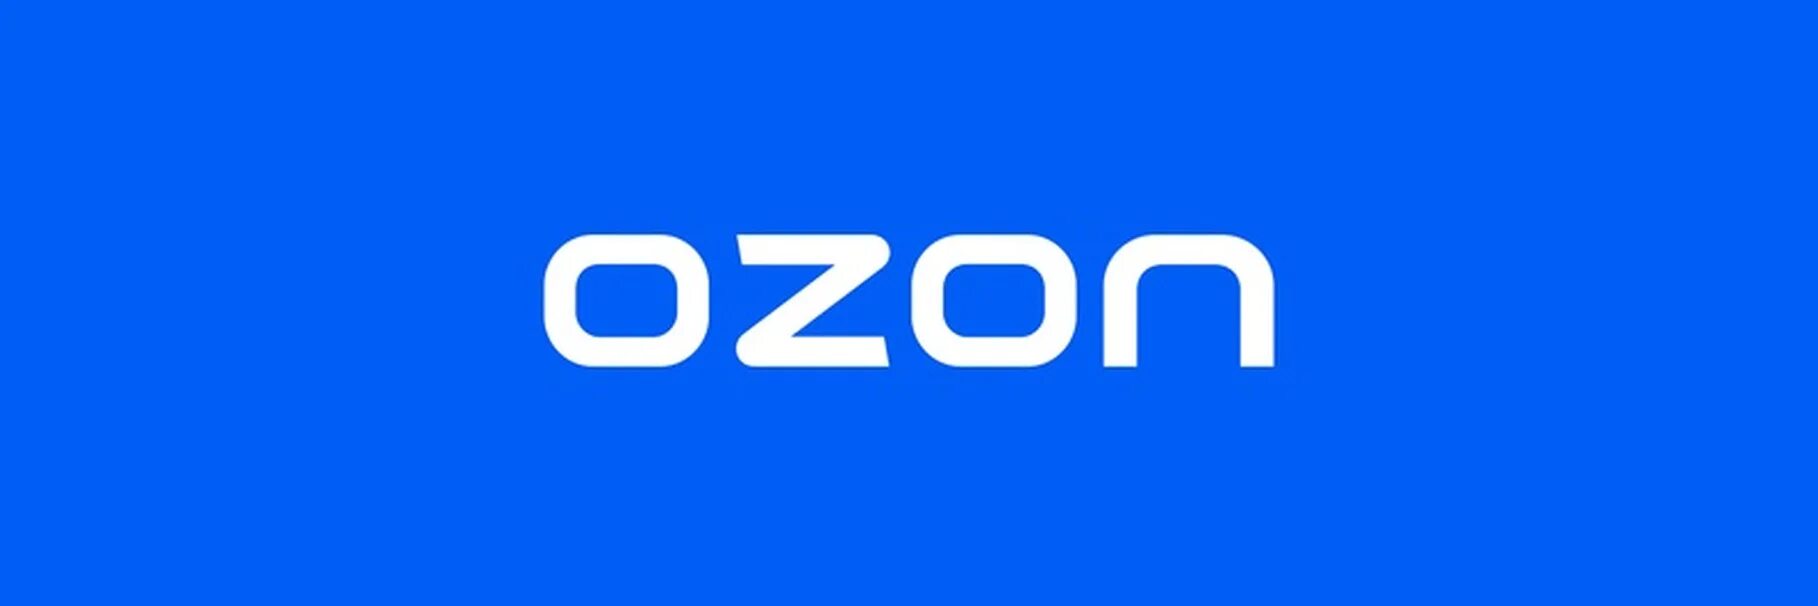 Озон тн. OZON. OZON логотип. Надпись Озон. Логотип Озон квадратный.